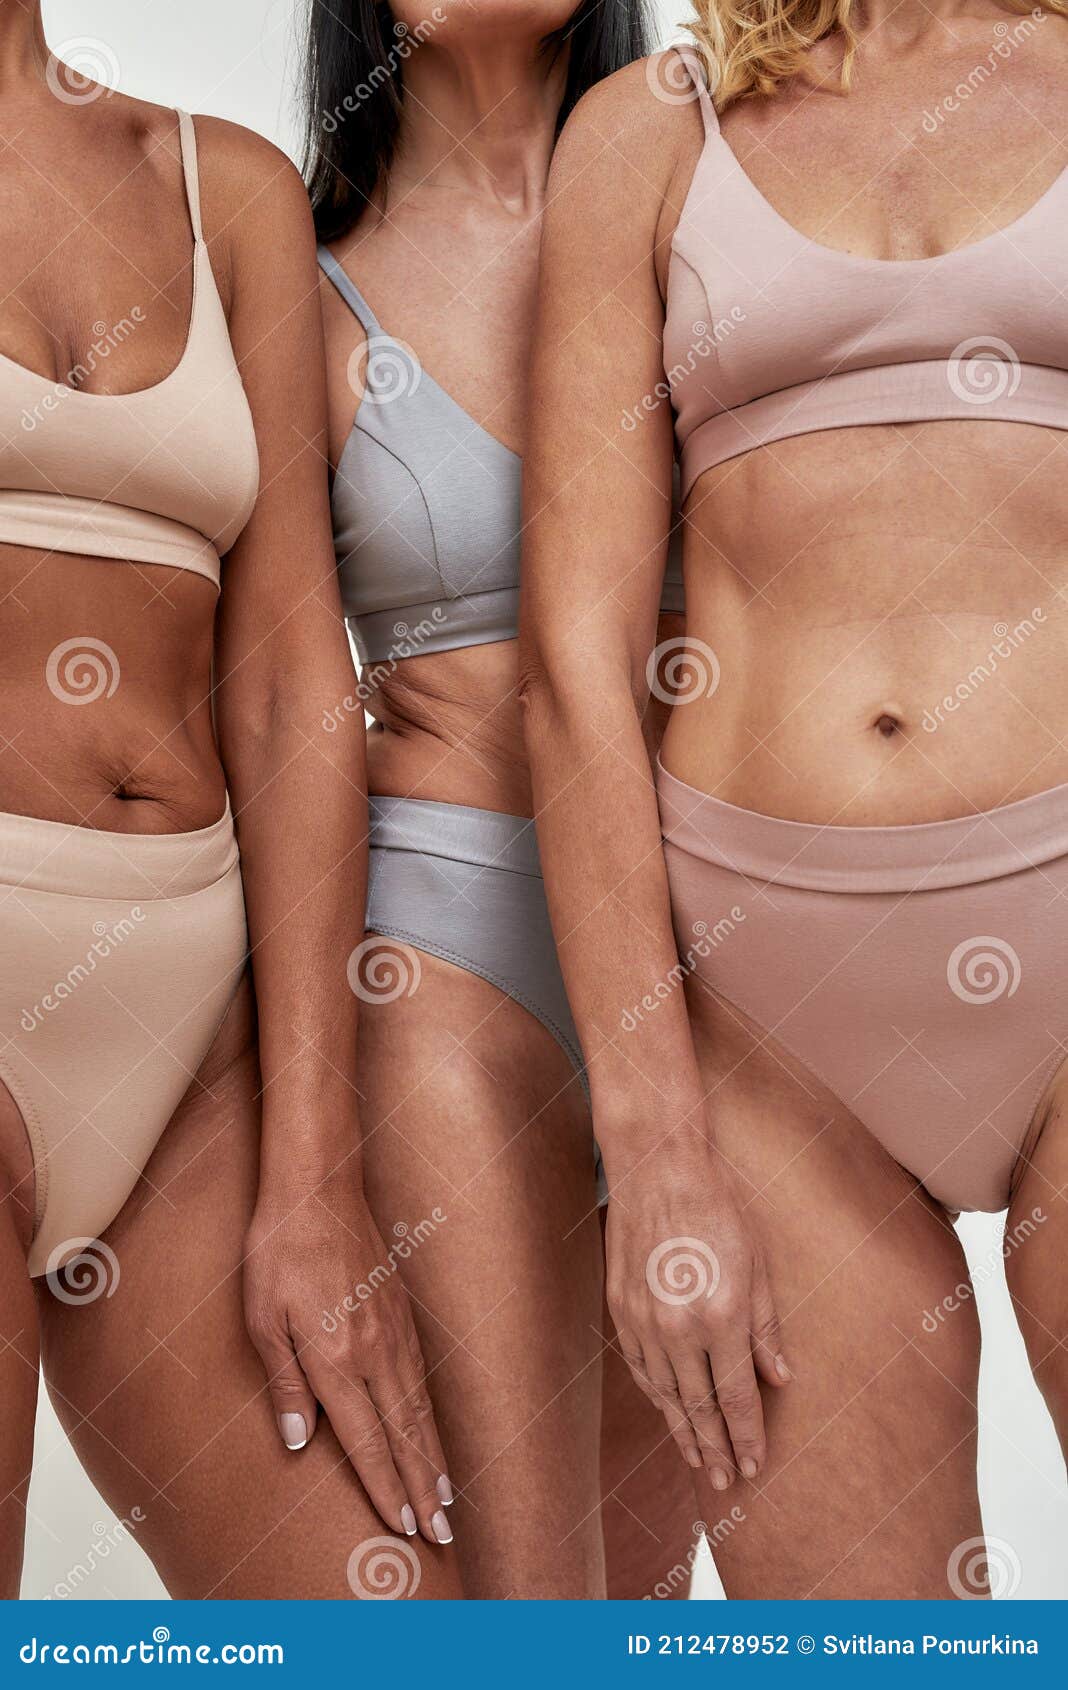 Body Care. Three Mature Women in Underwear Posing Half Naked in